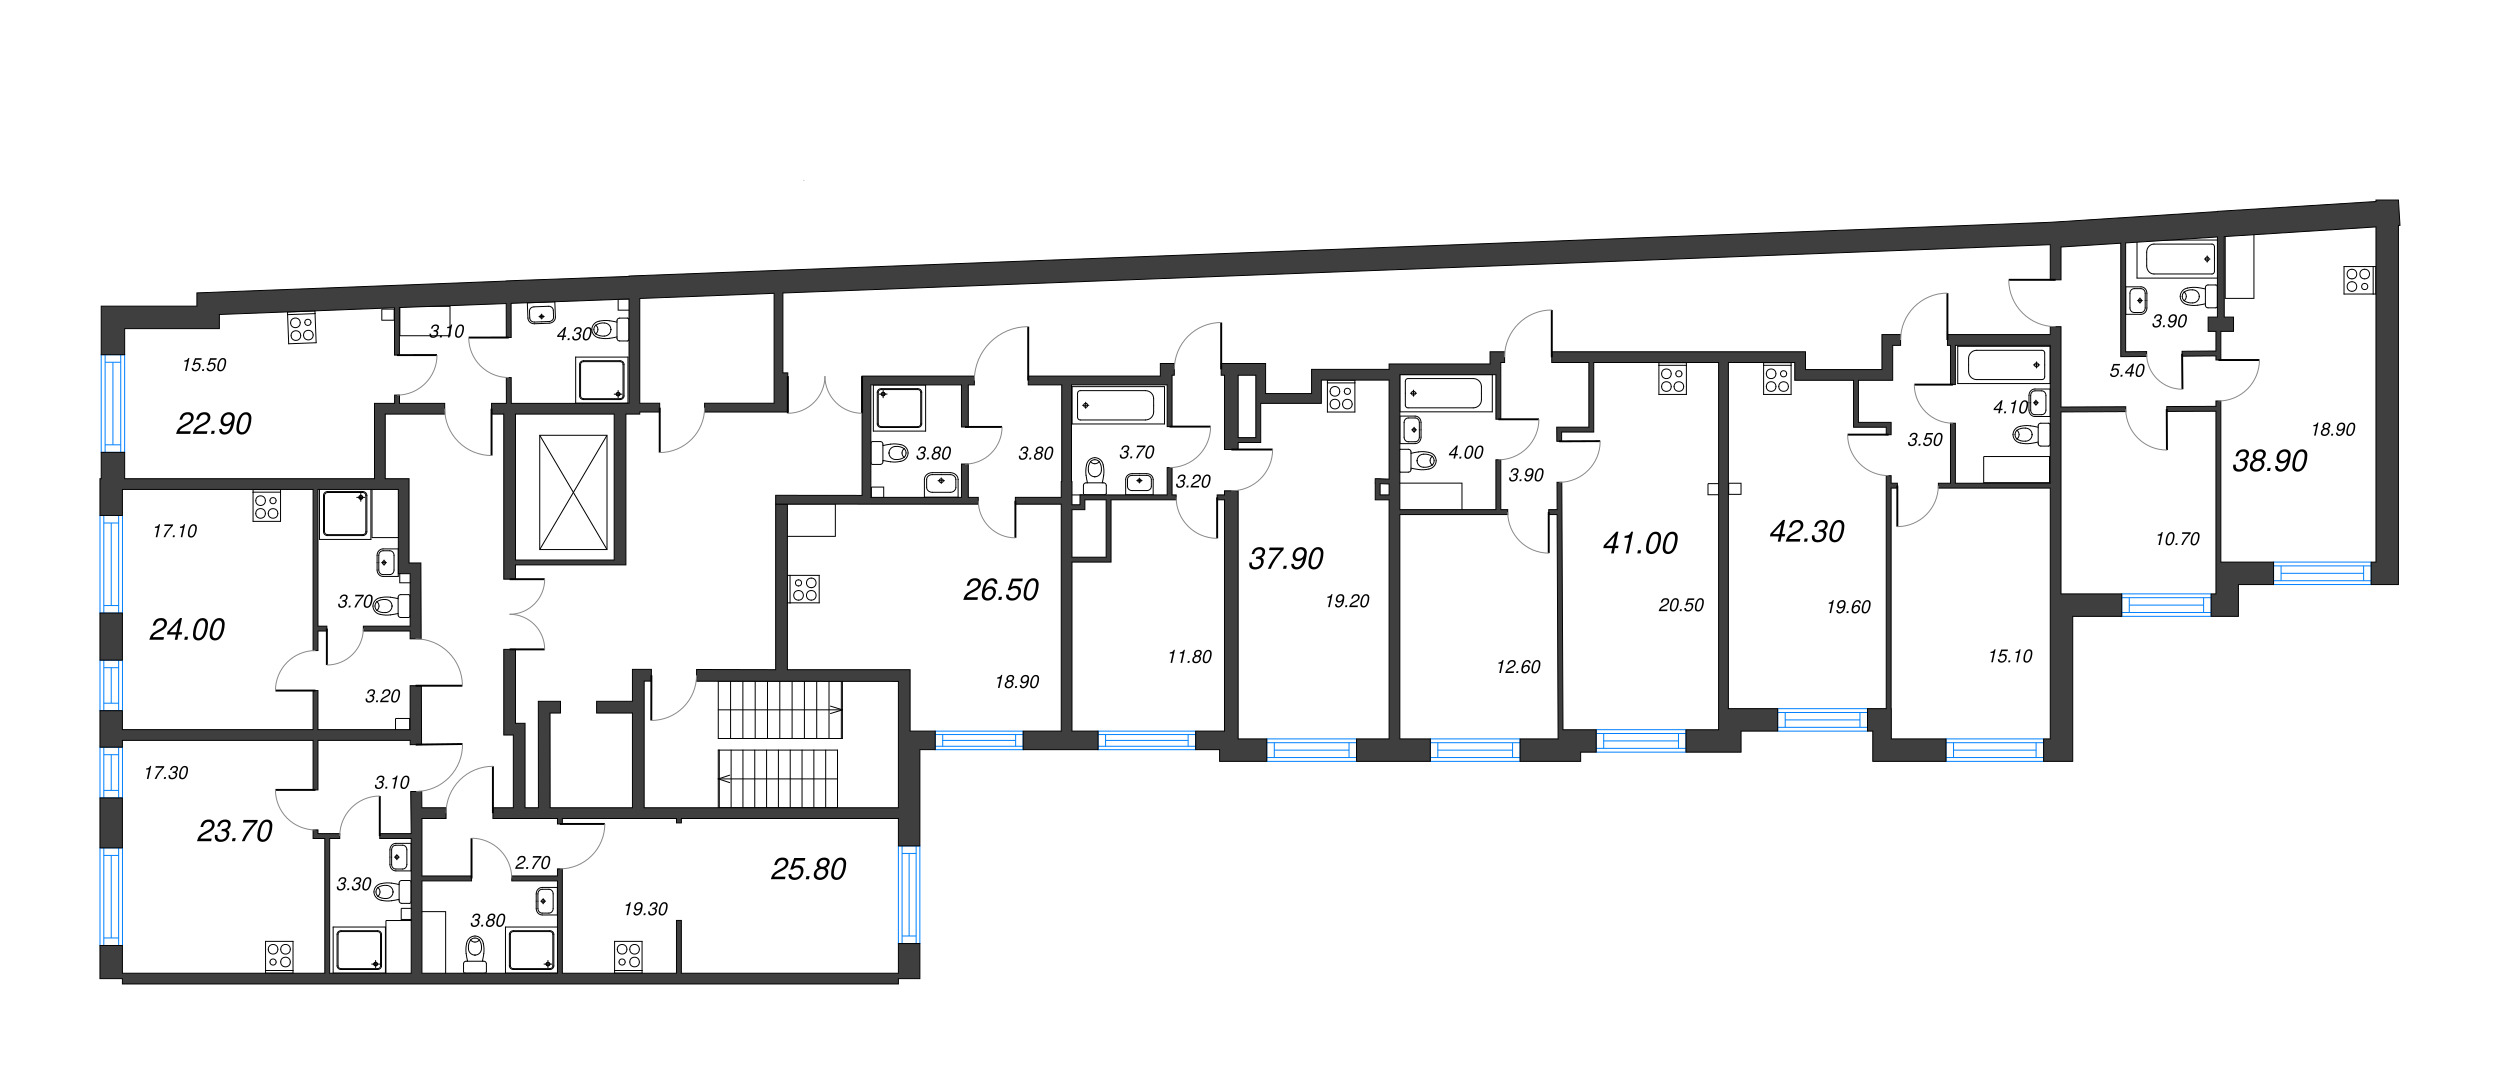 2-комнатная (Евро) квартира, 38.9 м² - планировка этажа